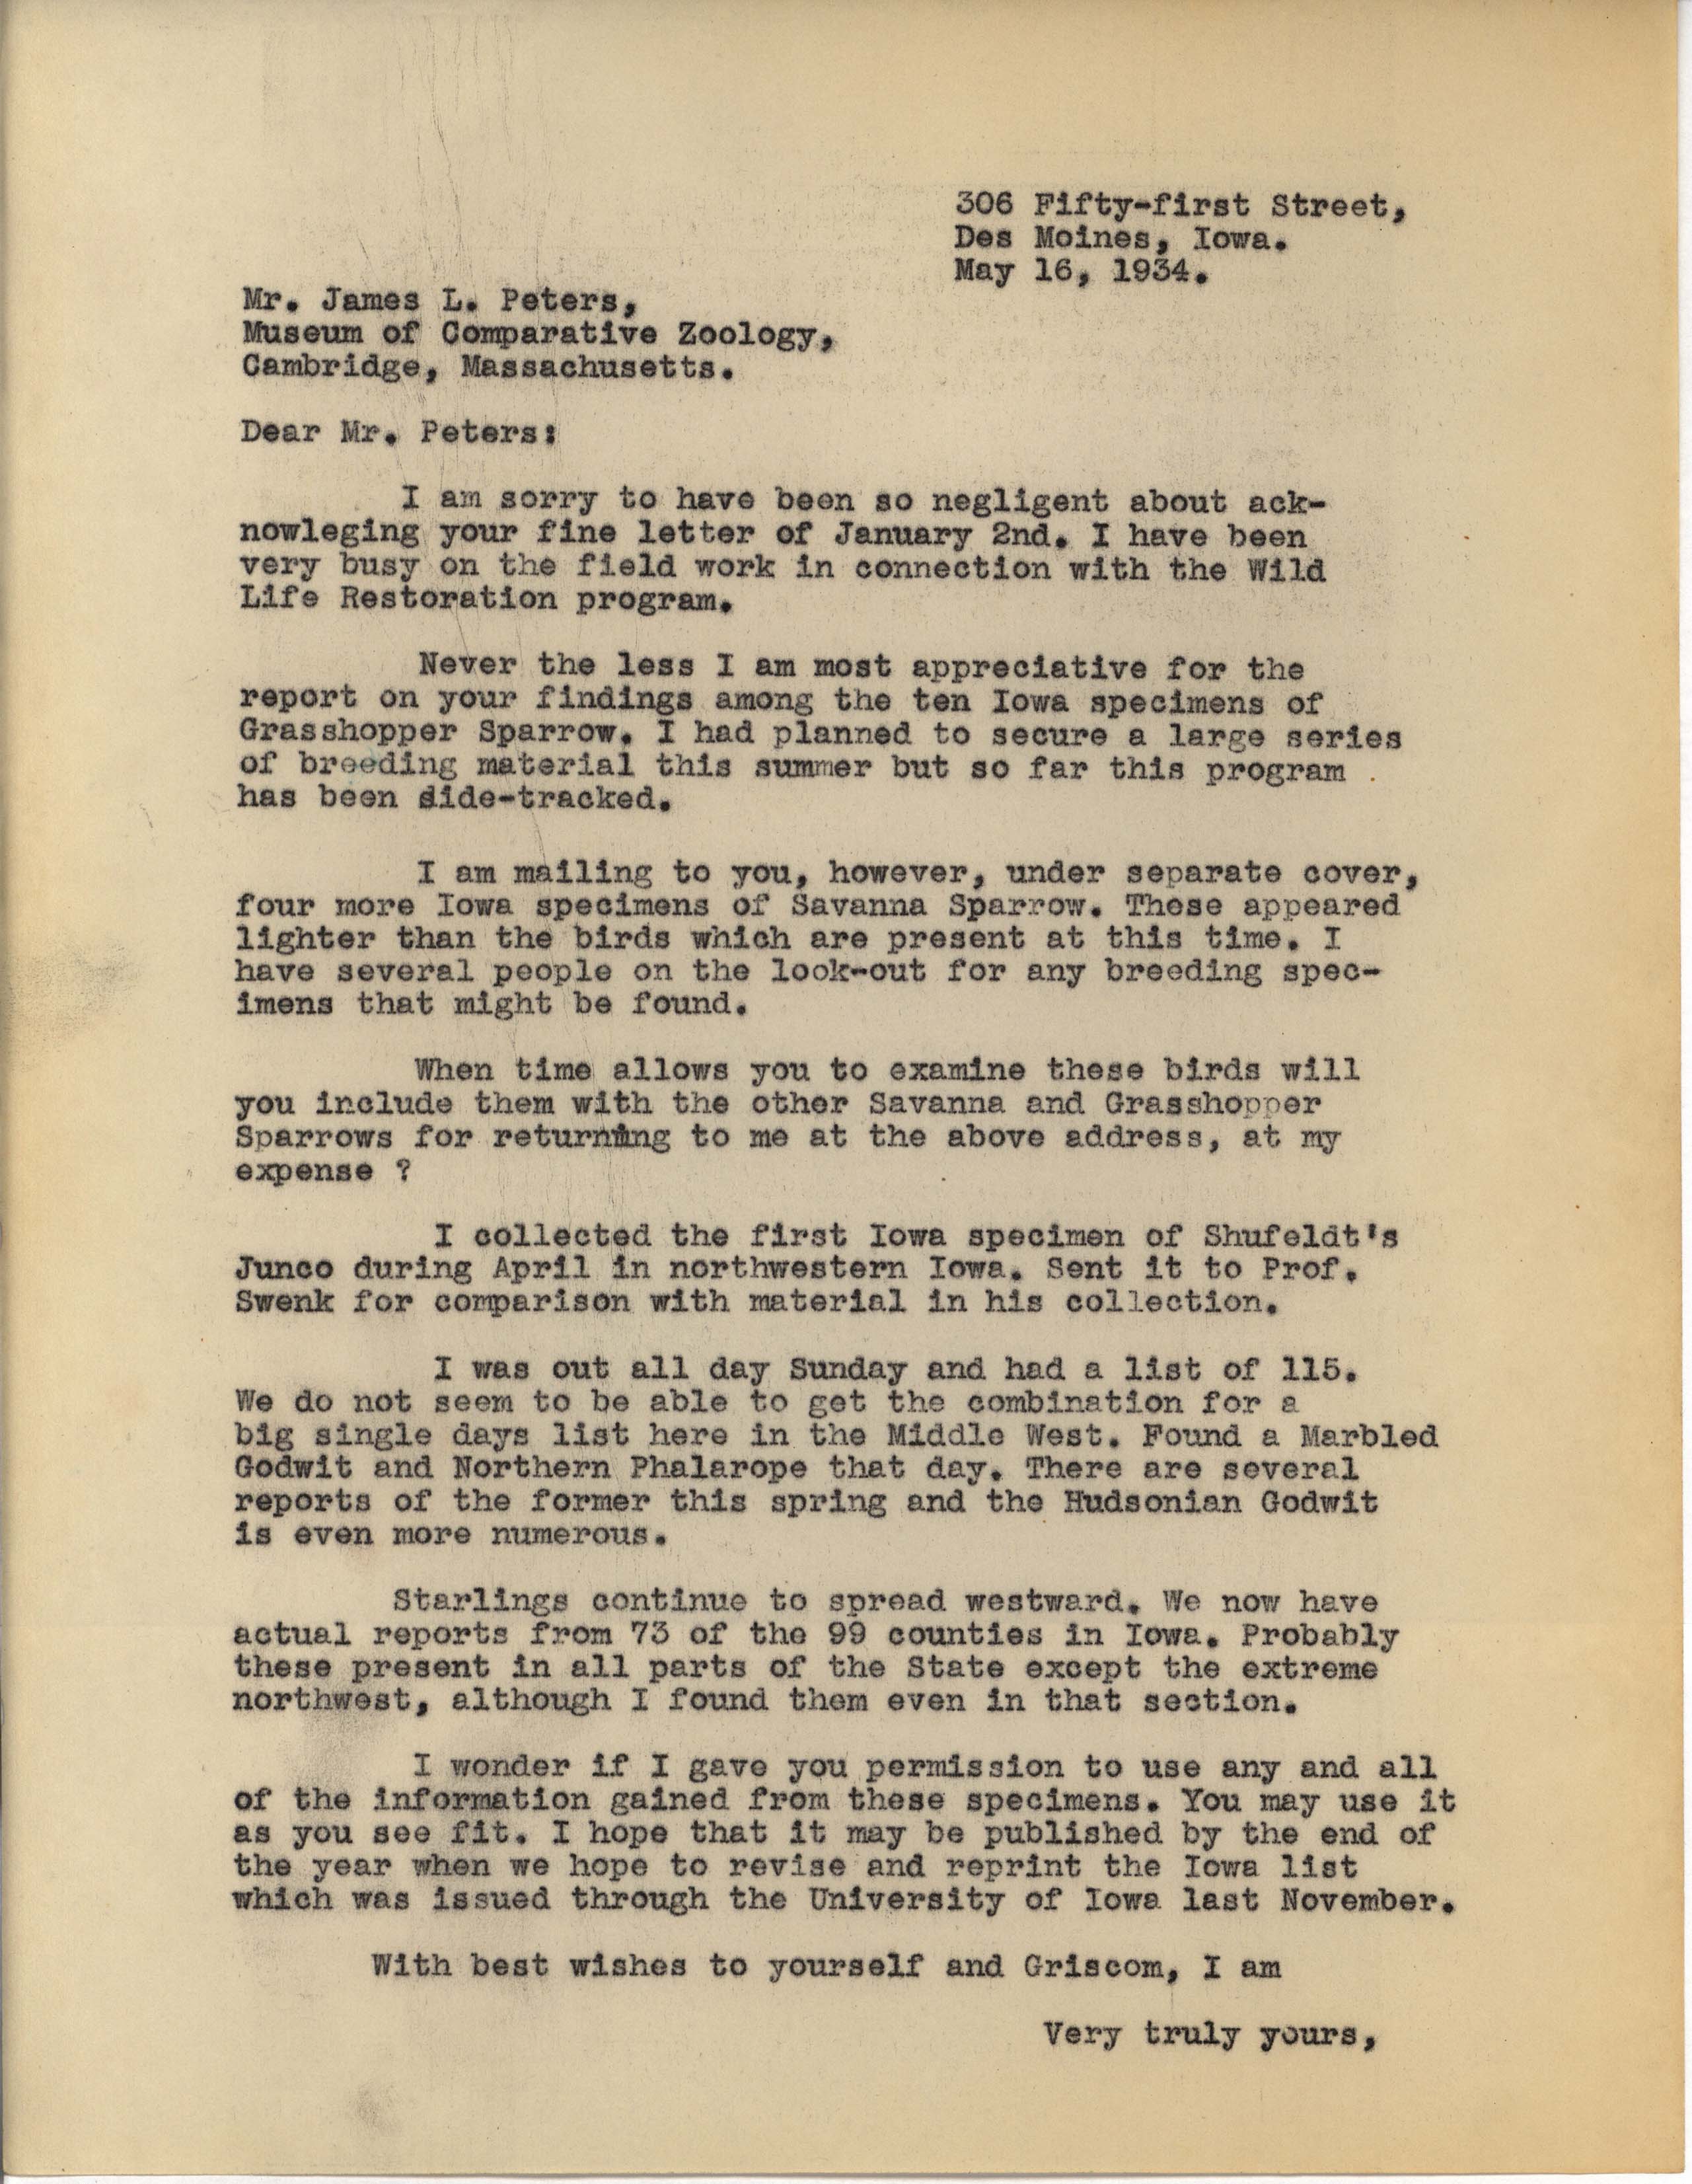 Philip DuMont letter to James Peters regarding Savannah Sparrow specimens, May 16, 1934